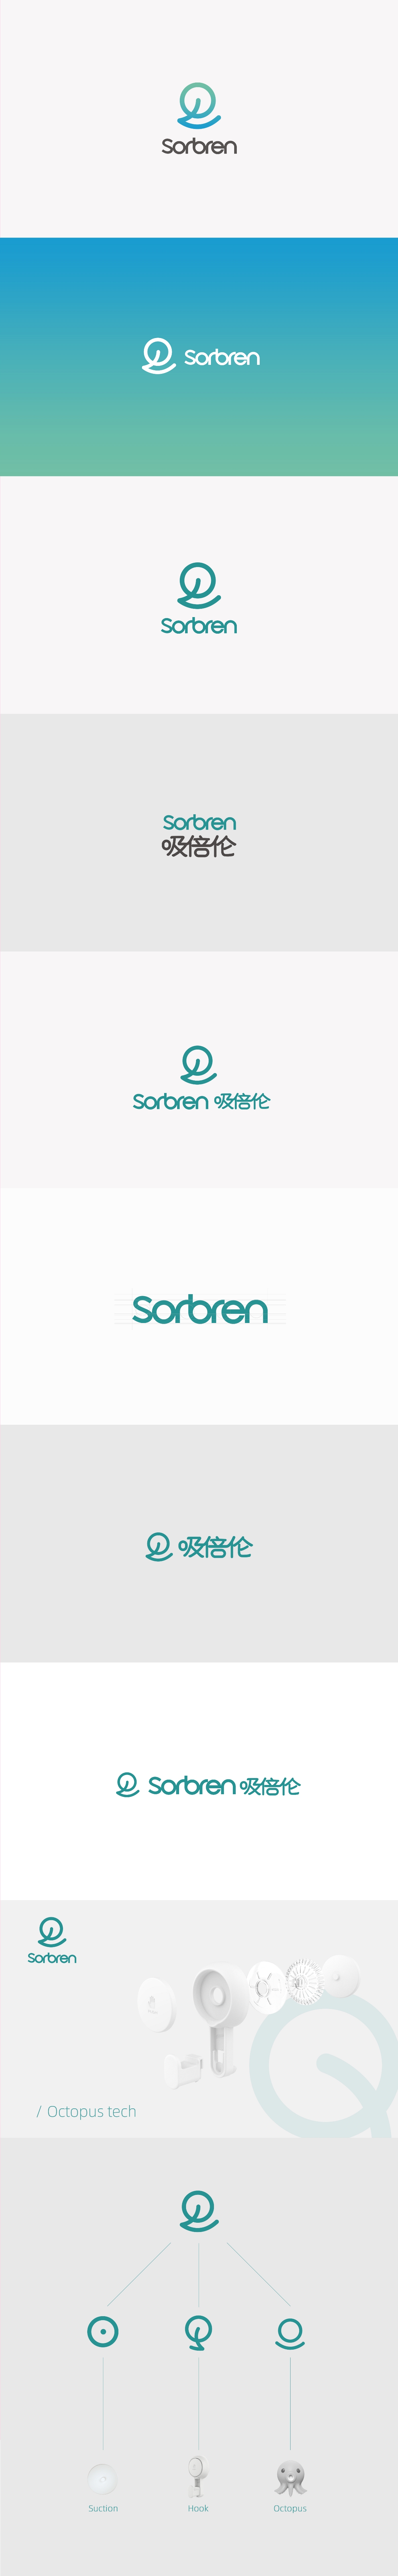 Sorbren技术品牌識別設計